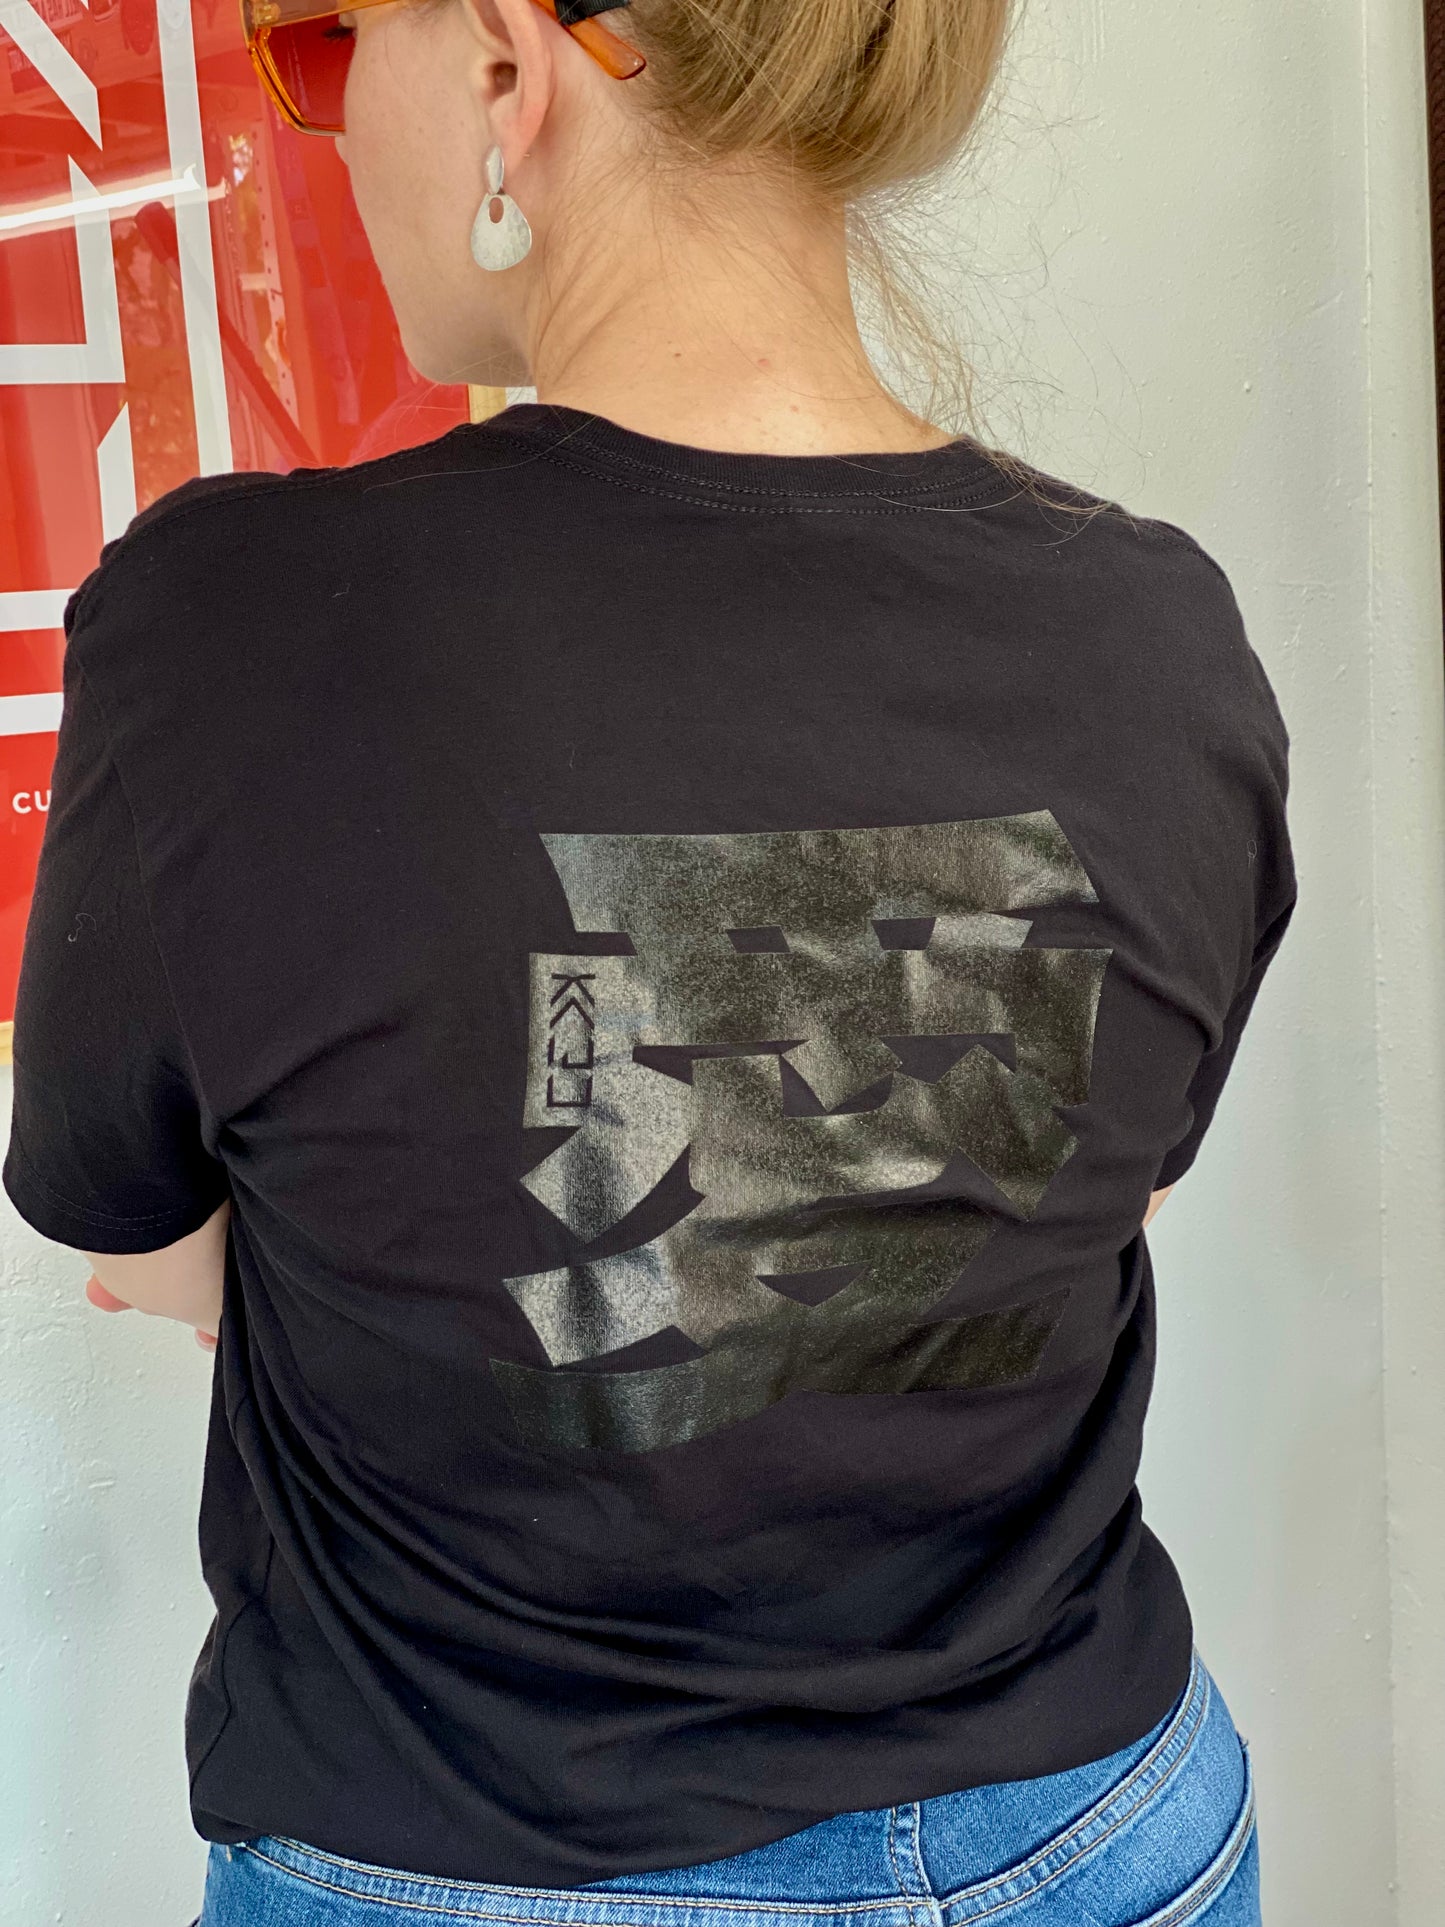 Kaiju Cut and Sew Corgi / Goji “Love” | Screen Printed | Unisex Short Sleeve T-Shirt